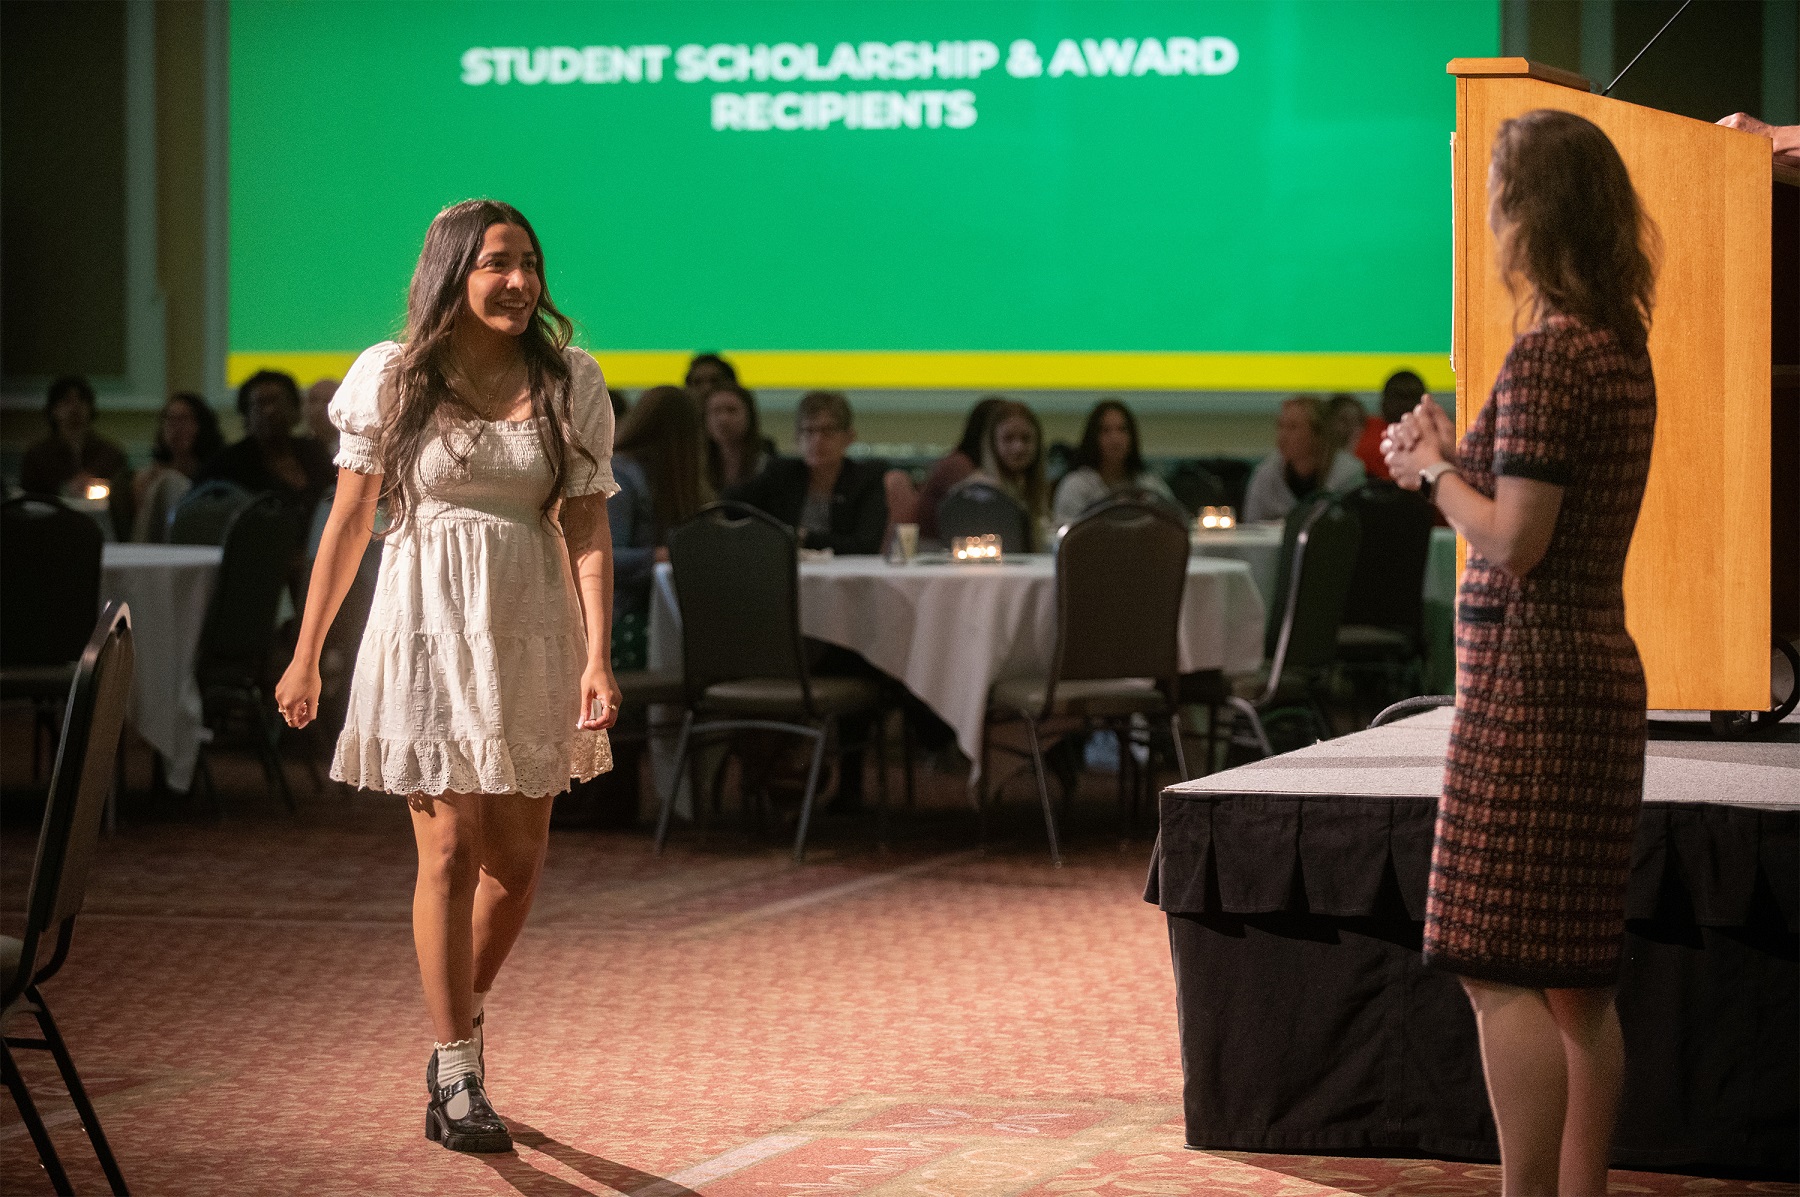 An OHIO student receives an award